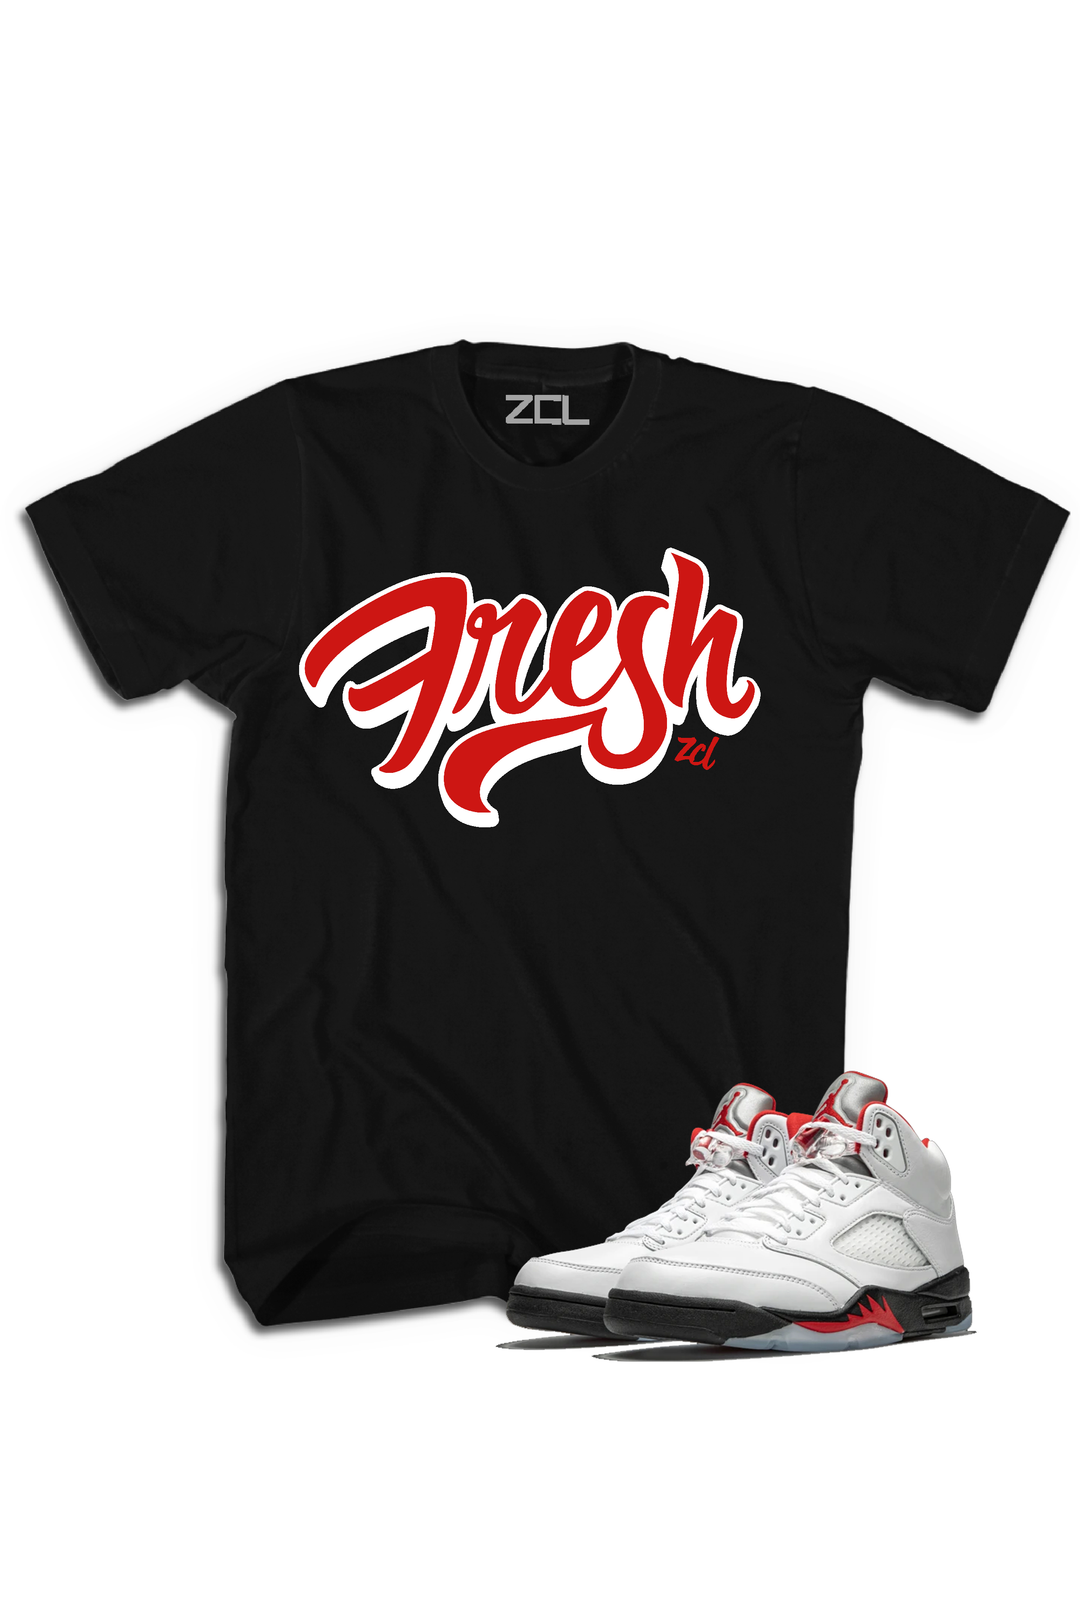 Air Jordan 5 Retro "Fresh" Tee Fire Red - Zamage